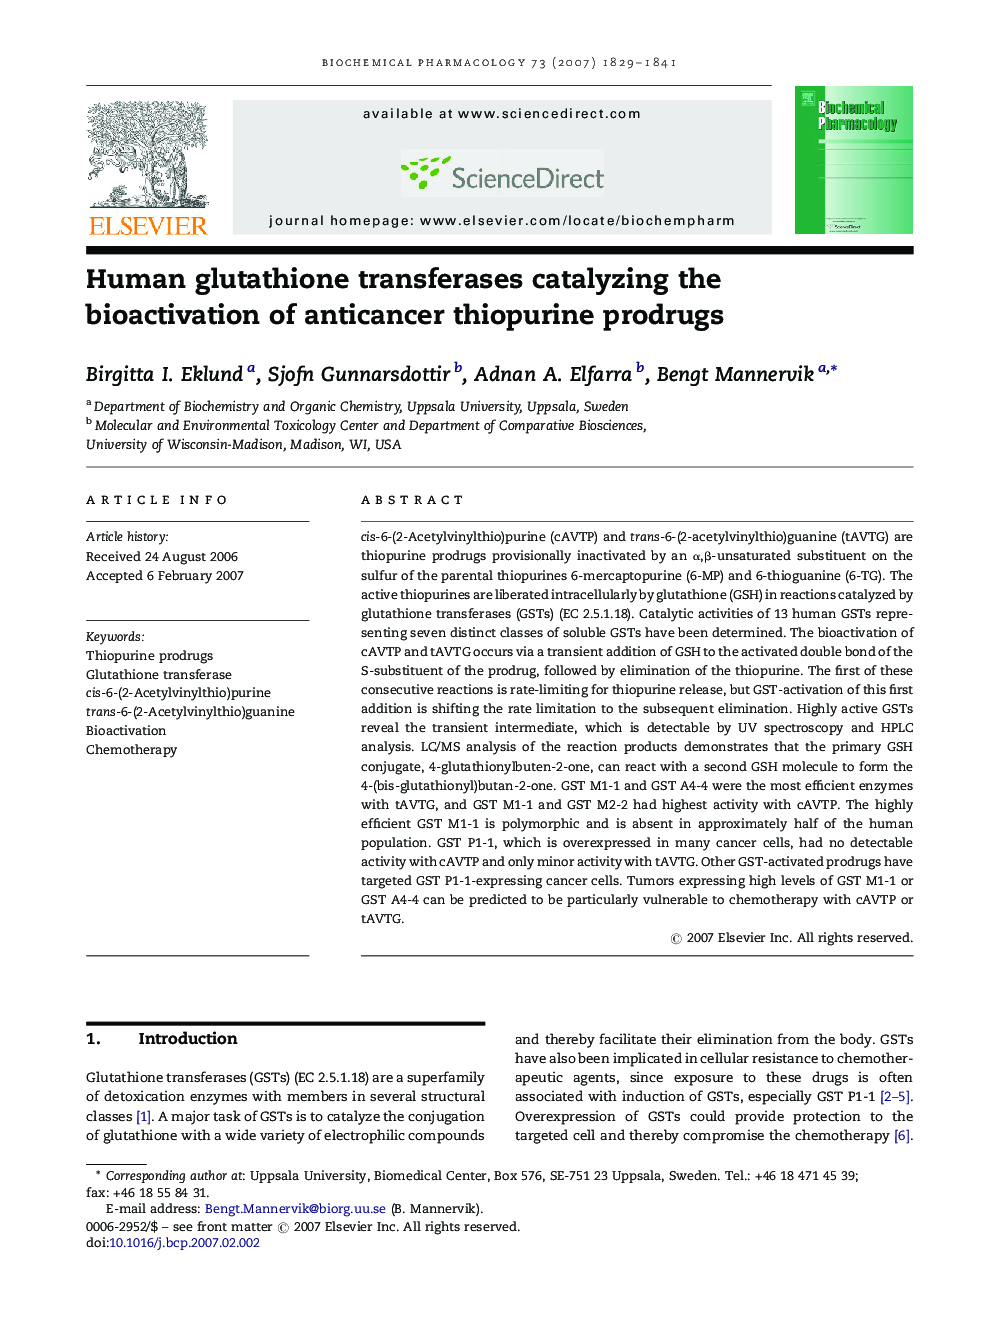 Human glutathione transferases catalyzing the bioactivation of anticancer thiopurine prodrugs